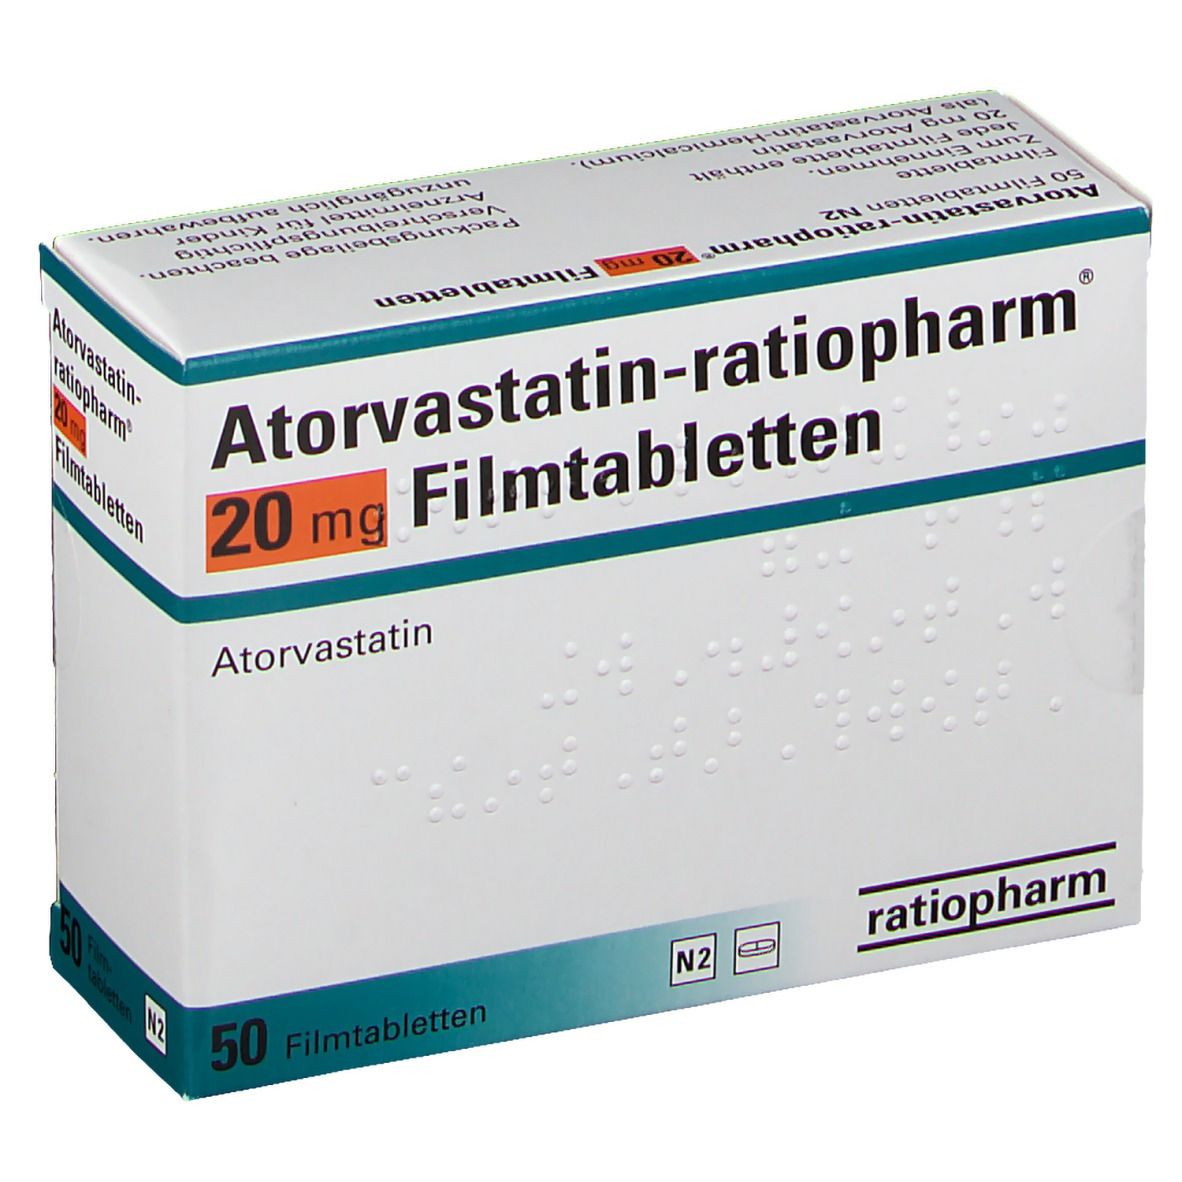 Atorvastatin-ratiopharm® 20 mg